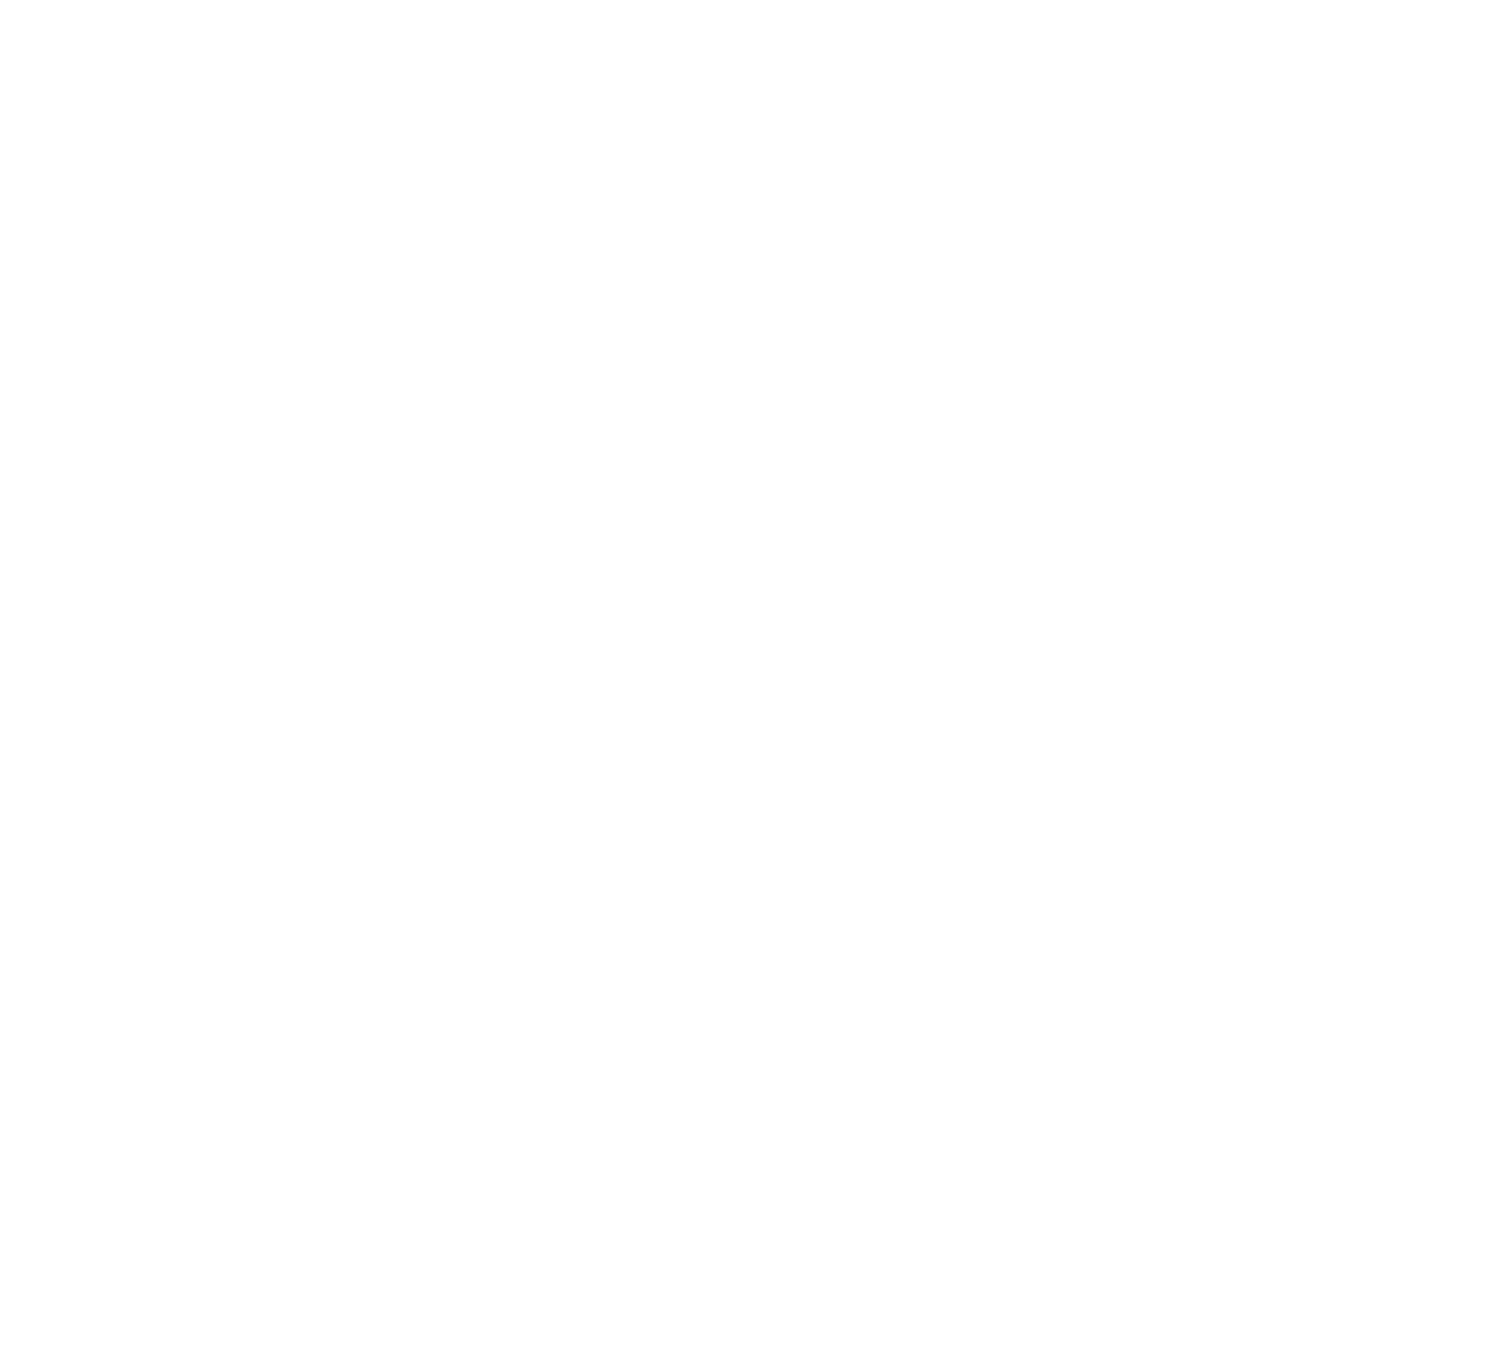 Mondragon Design + Build